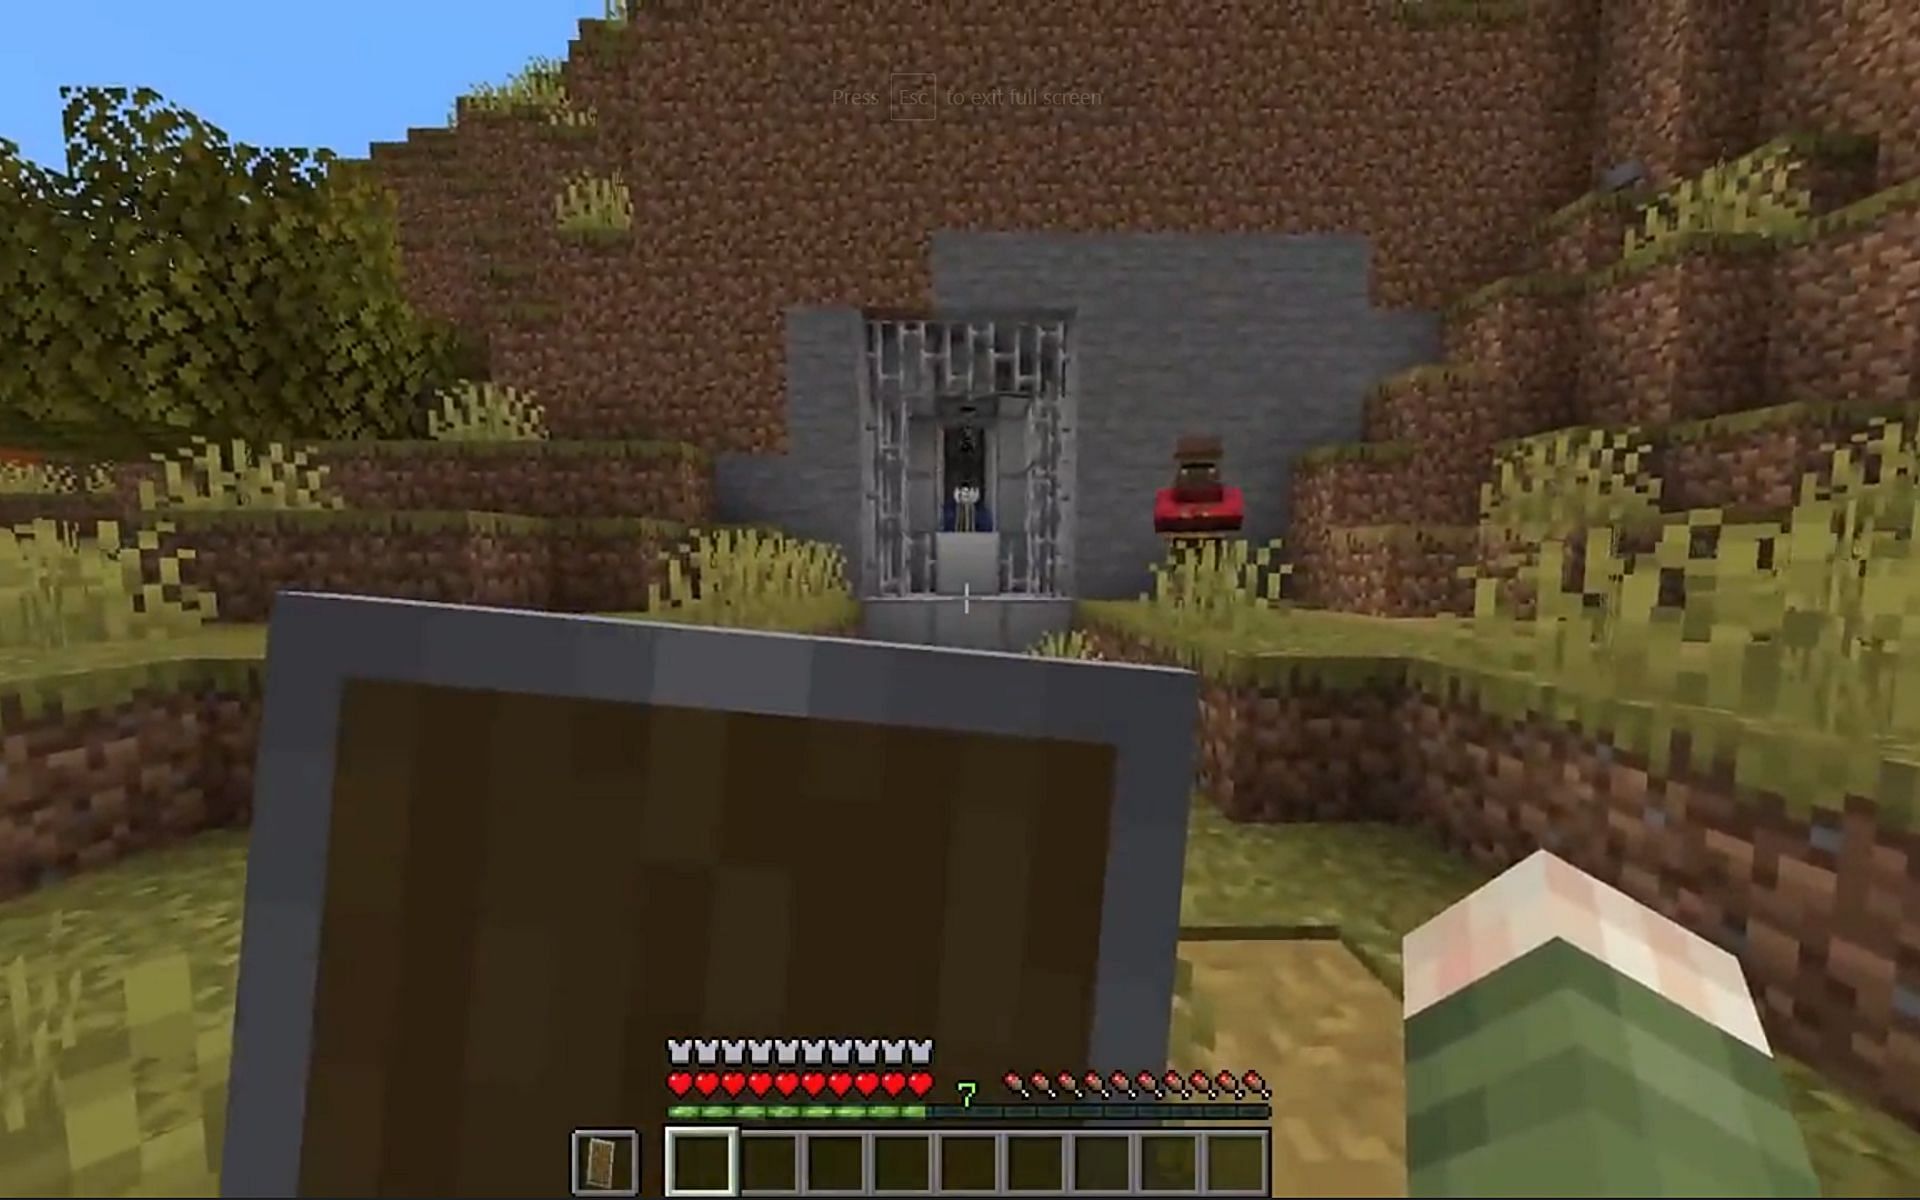 Railgun with arrows made from redstone contraption in Minecraft (Image via u/SK92300 Reddit)